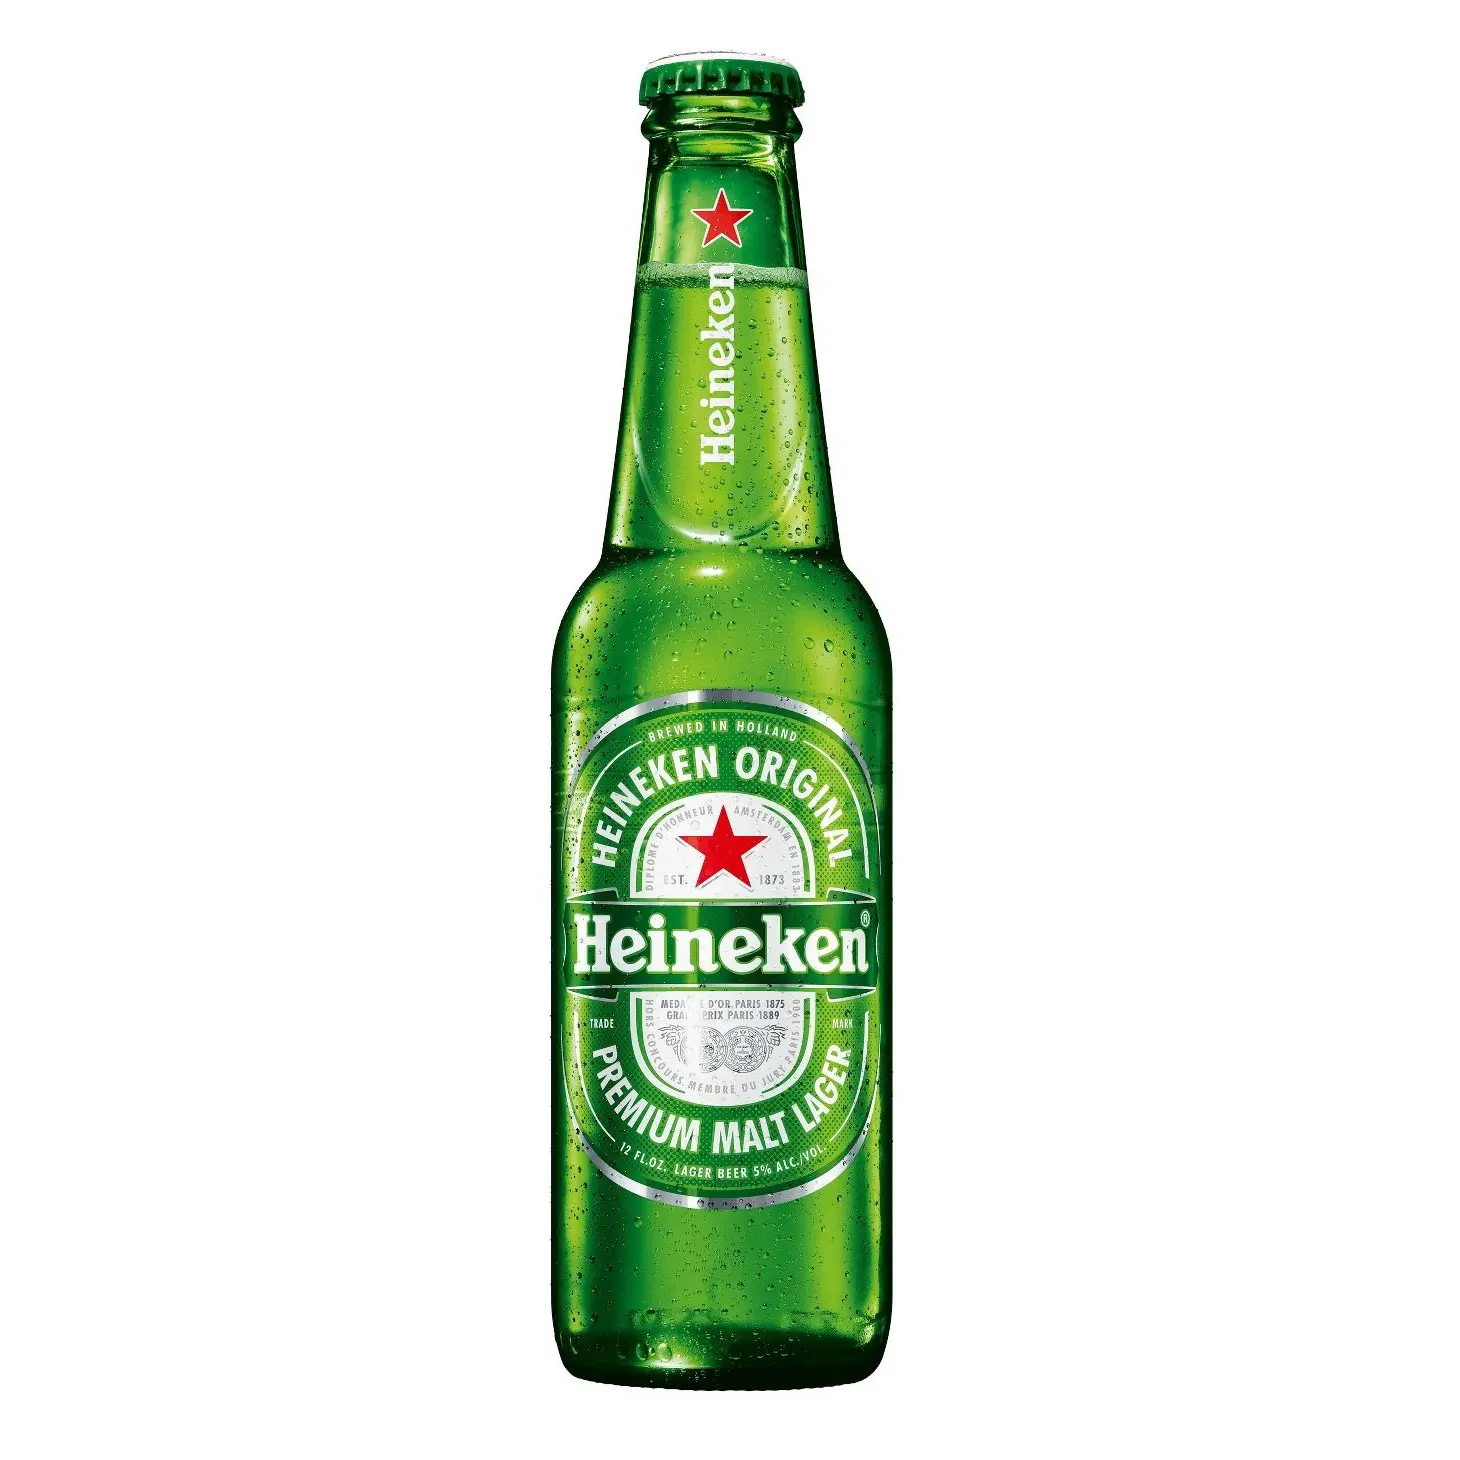 High Quality Heineken Beer, Malt Lager, 24 Pack At Low Price